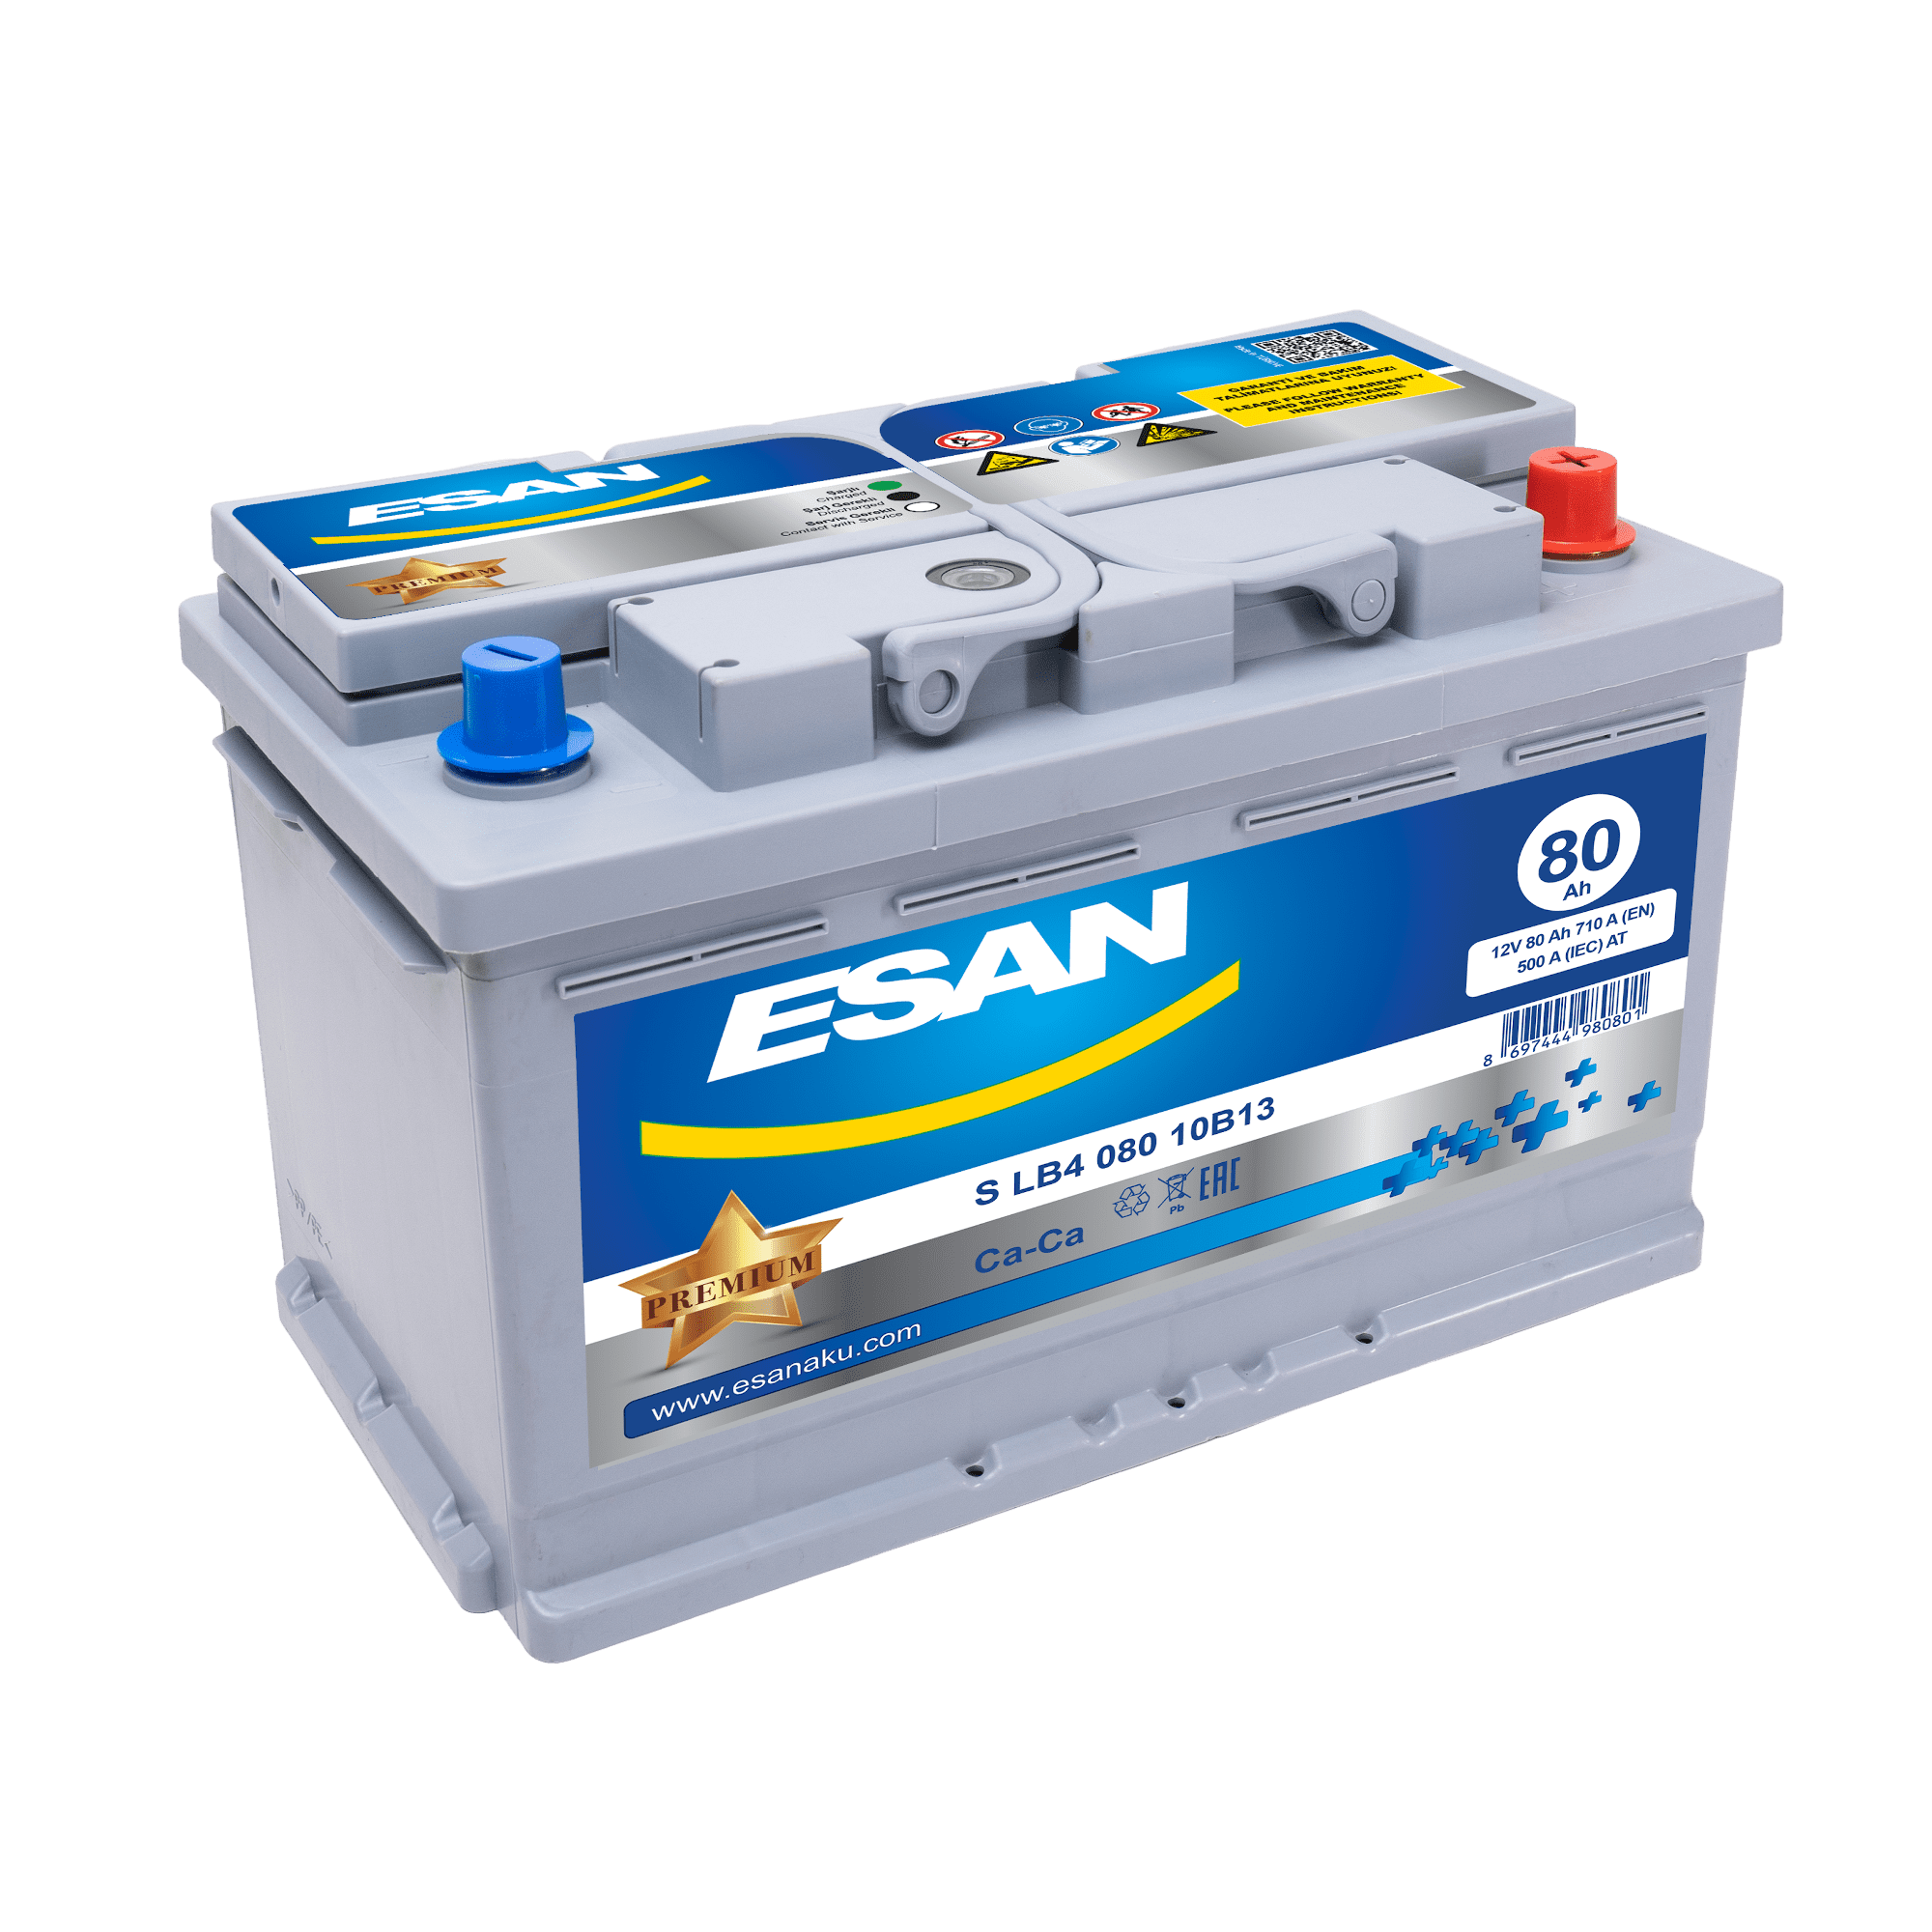 Автомобильная аккумуляторная батарея ESAN SMF S LB4 080 10B13, 80 Ач, LB4 DIN, 0/1